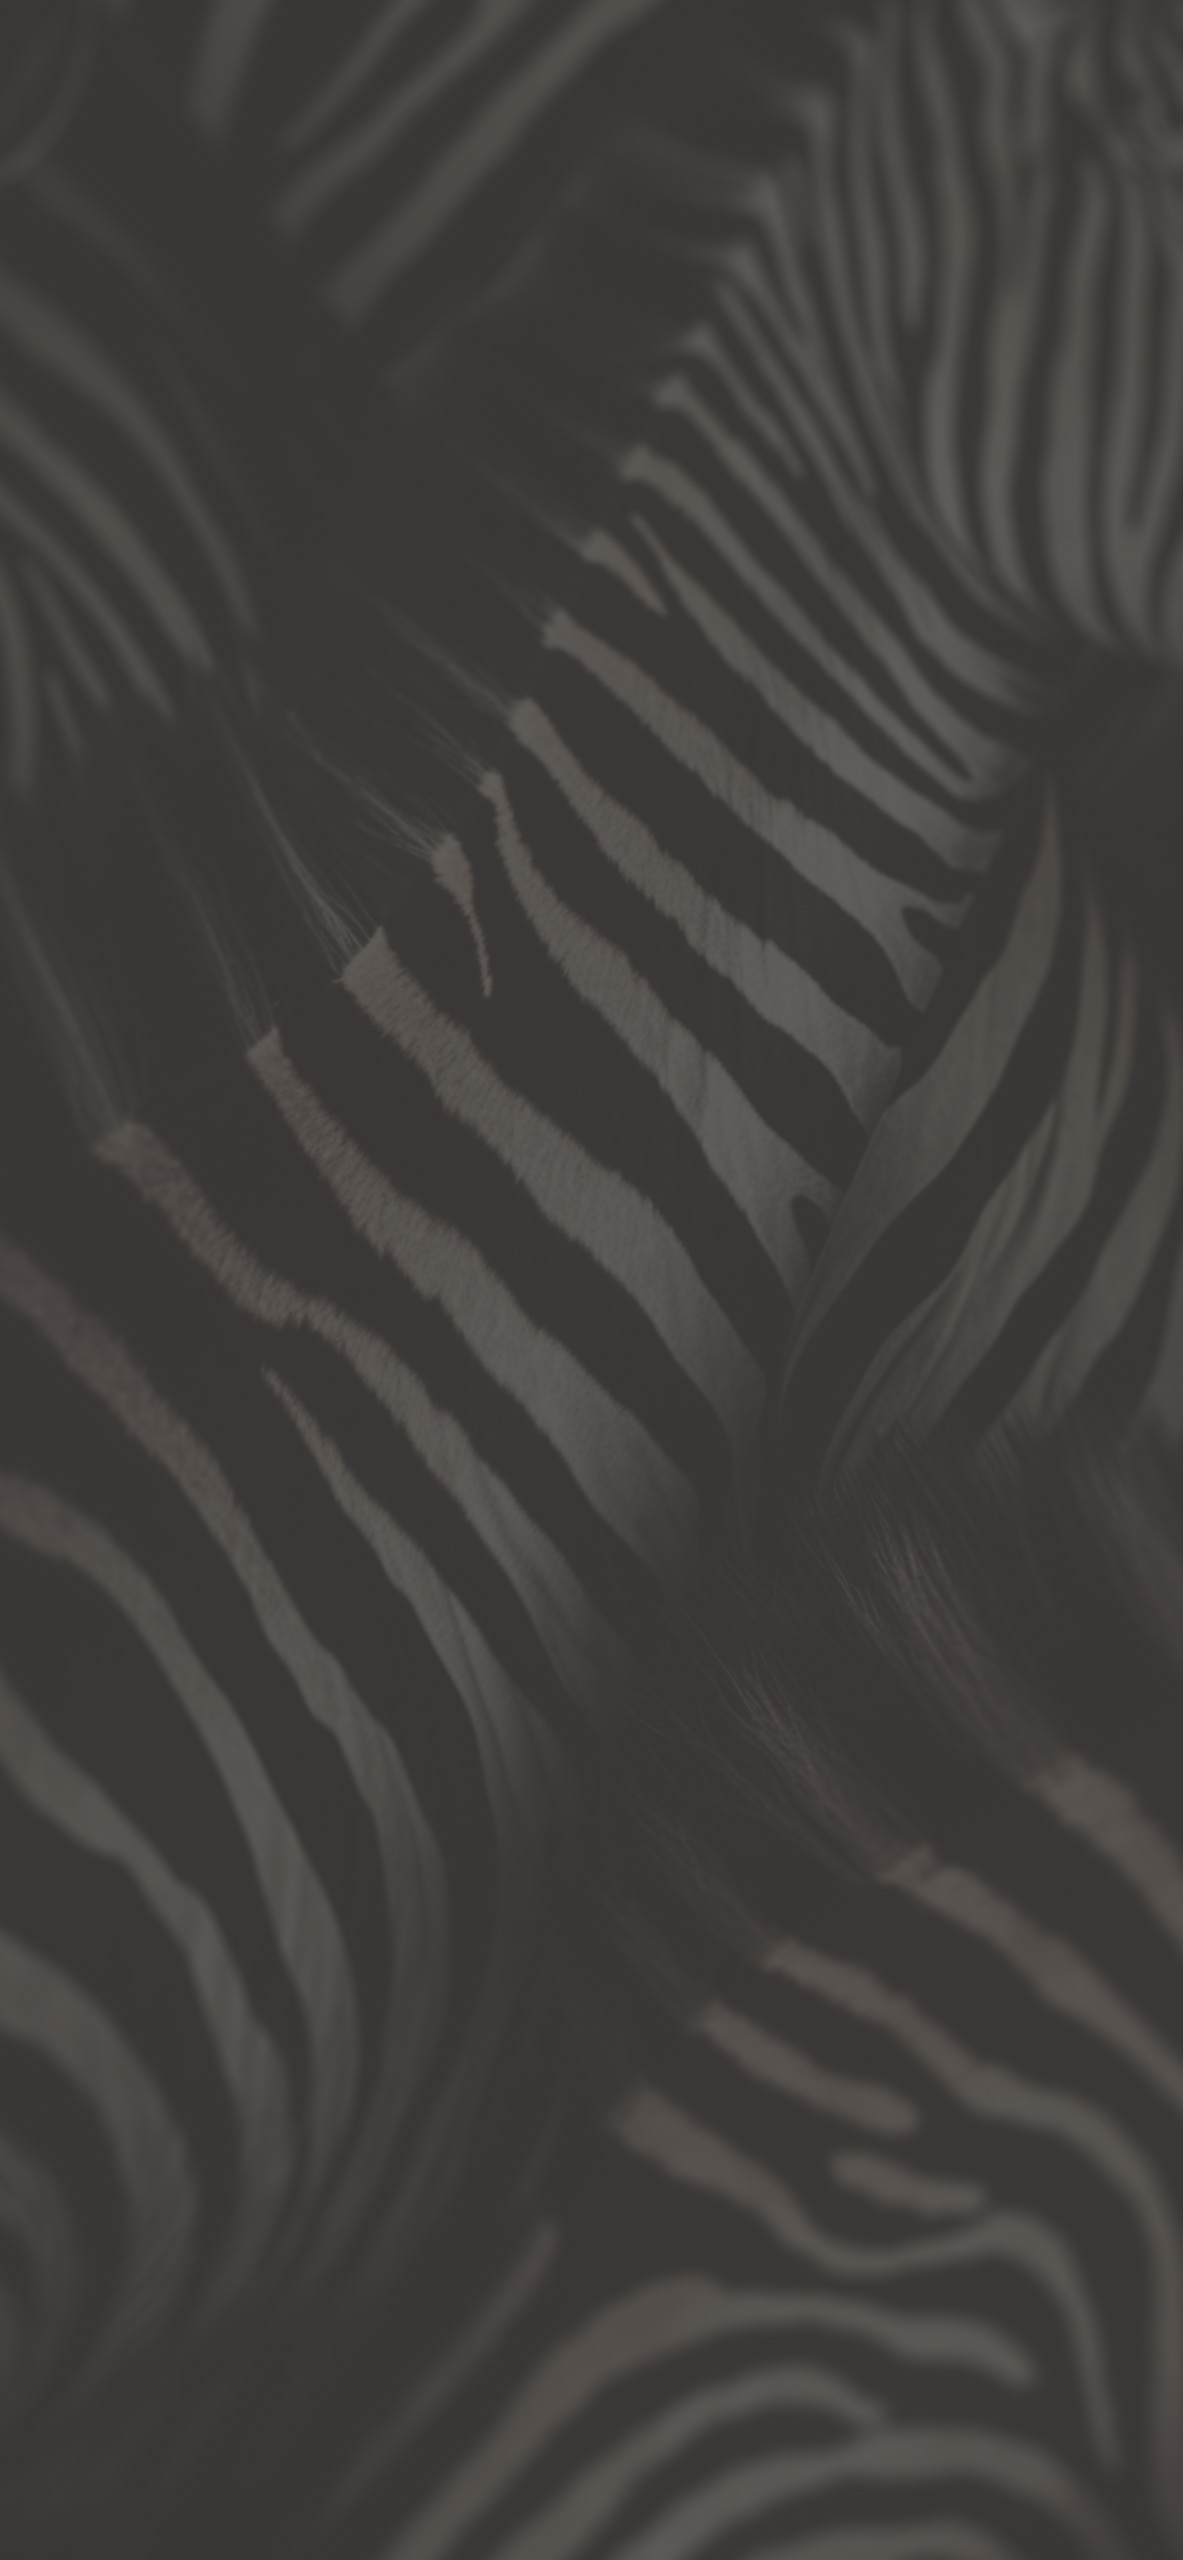 zebra pattern background